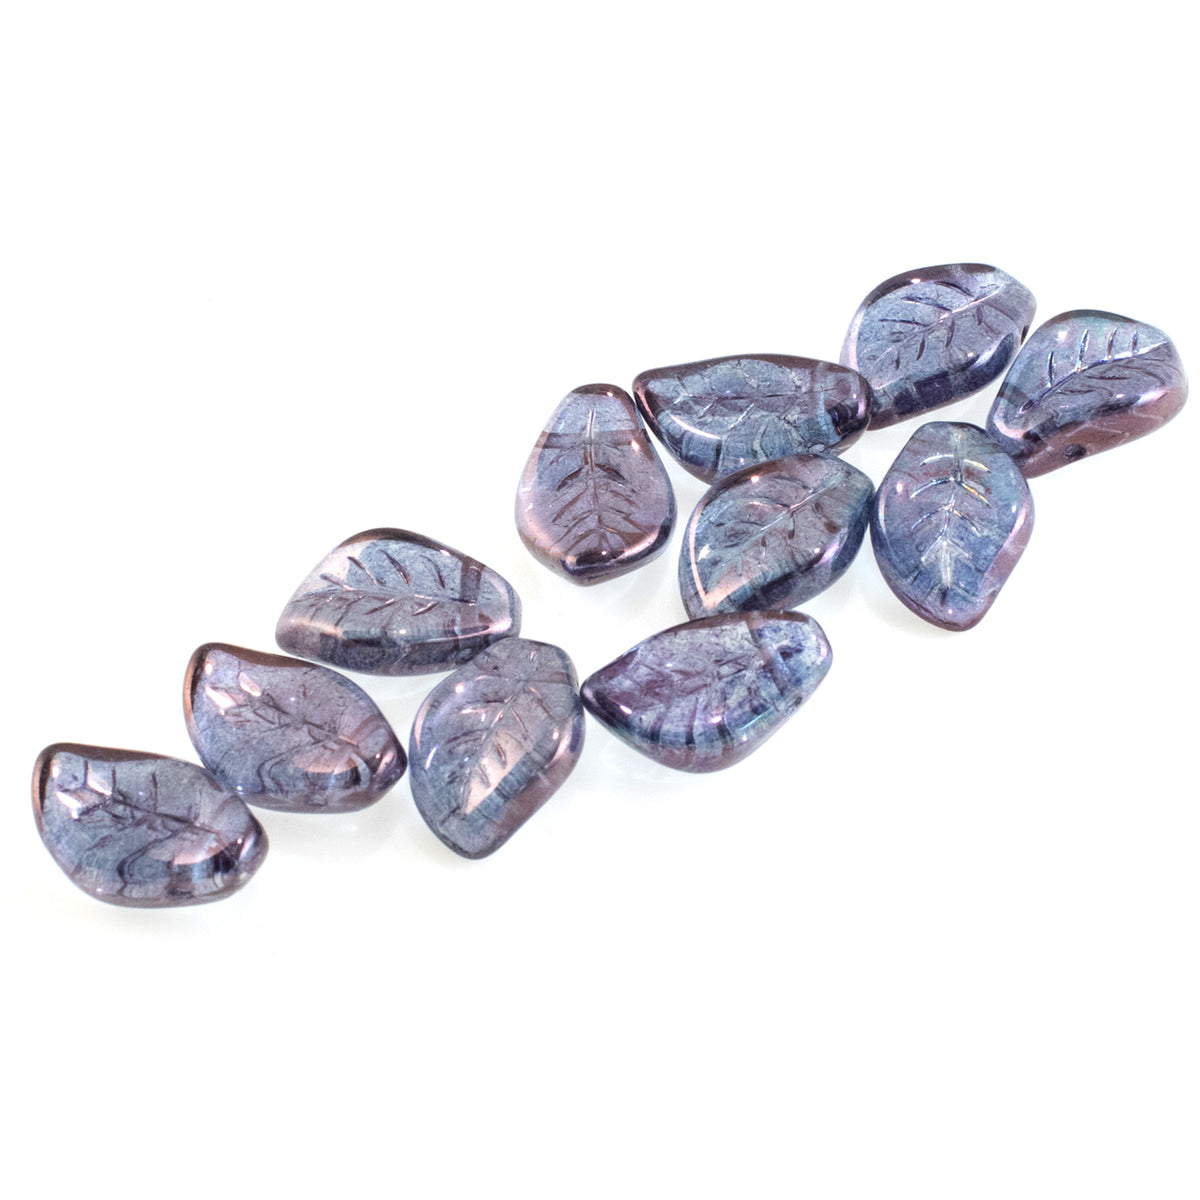 Czech glass teardrop beads 30pc Lumi purple luster 9x6mm – Orange Grove  Beads